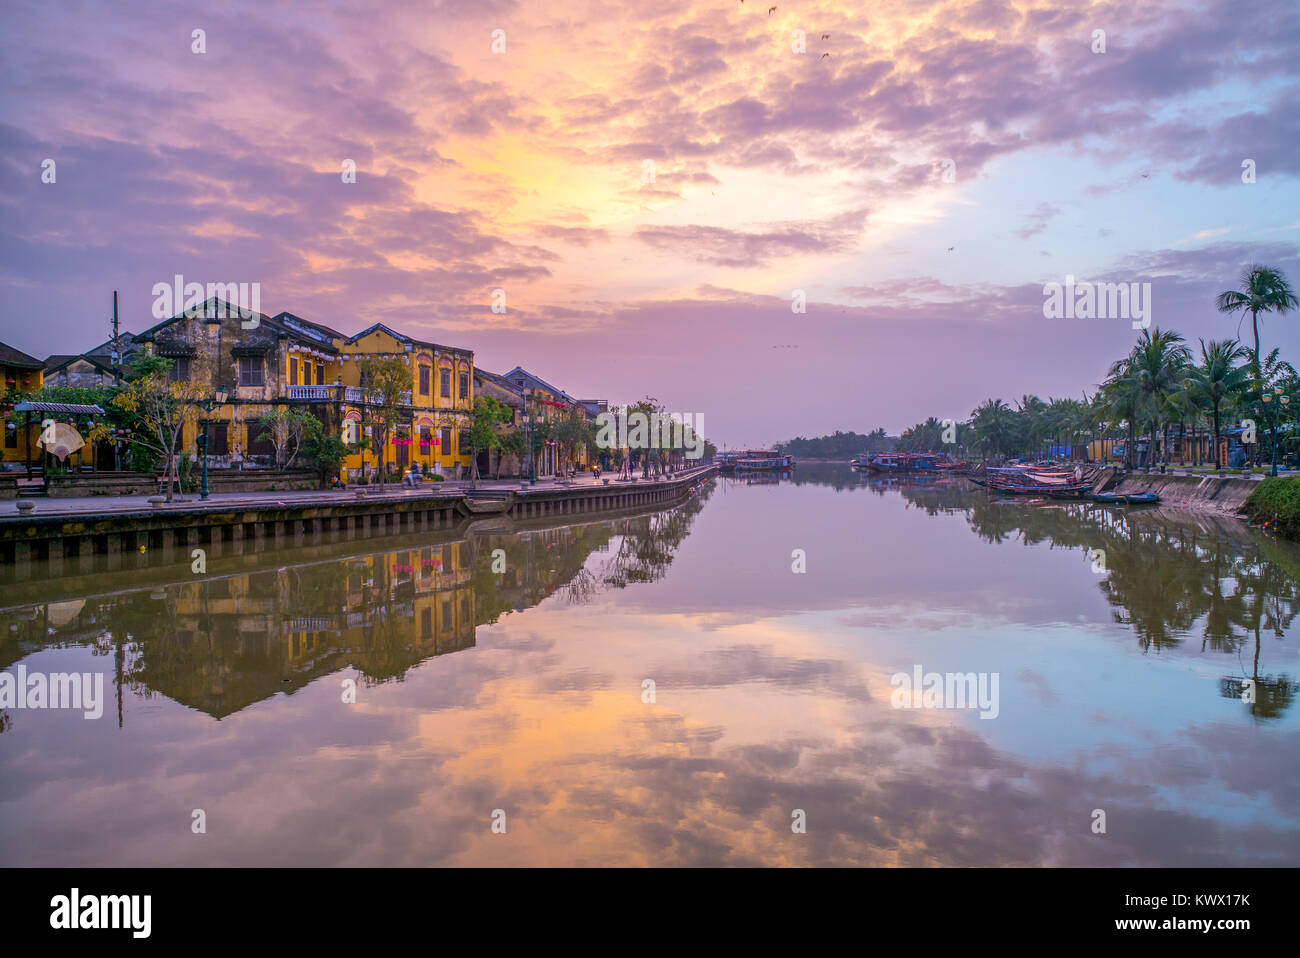 El paisaje de la ciudad antigua de Hoi An, Vietnam Foto de stock